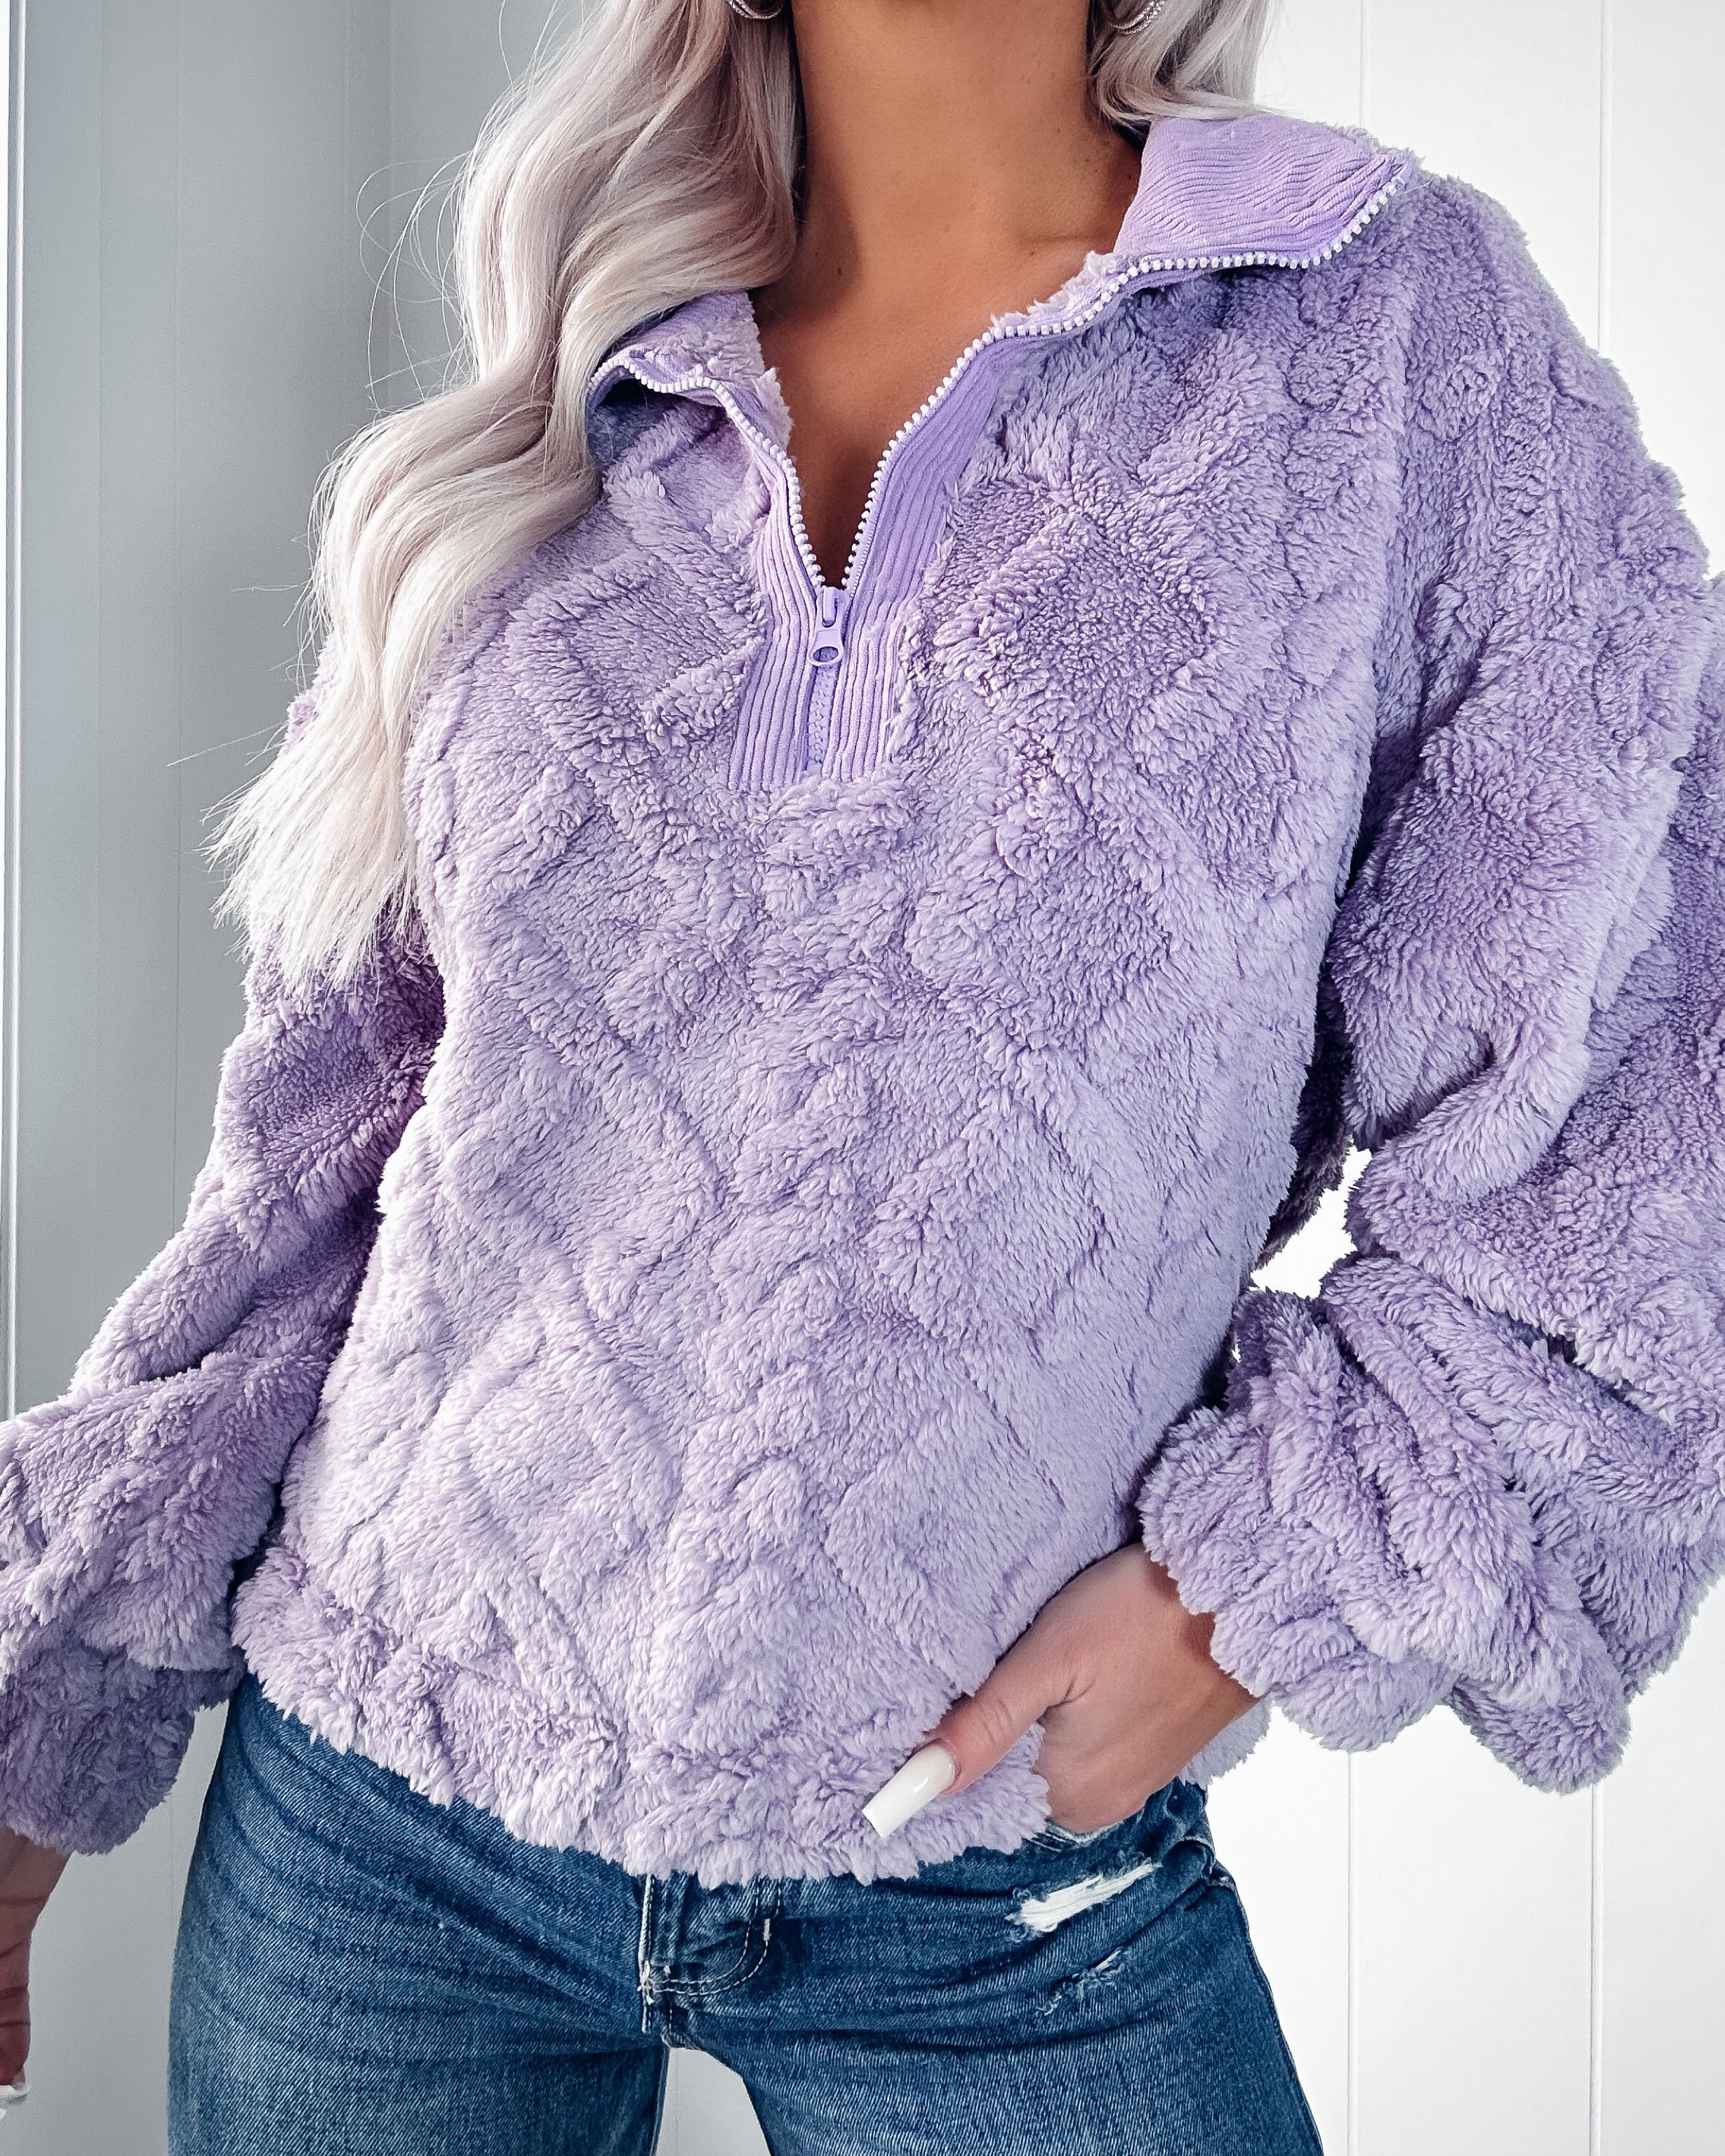 Aspen Feels Sherpa Pullover - Lavender